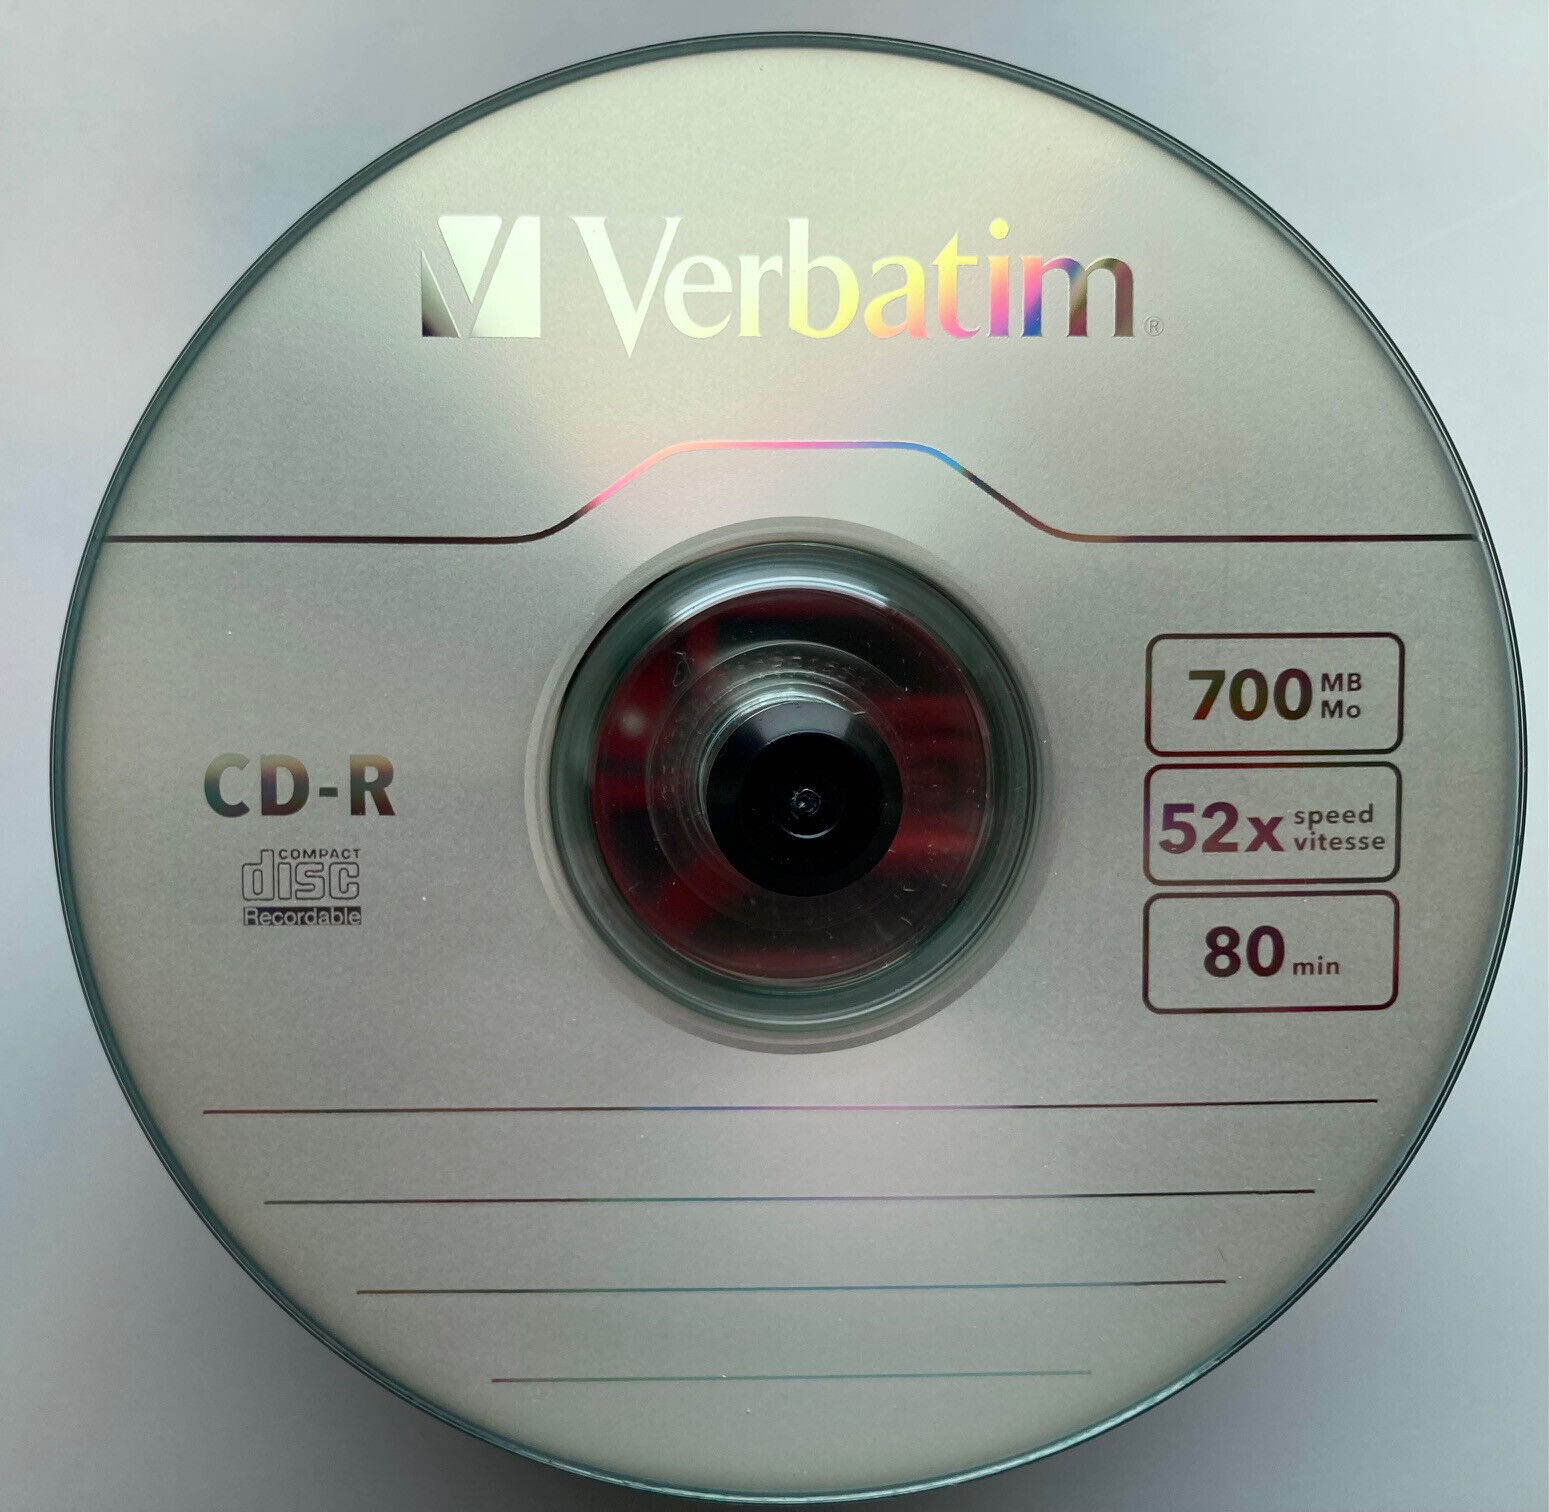 Verbatim CD-R 700Mb 52x Blank Recordable Discs – New, Unused, Open Box (30 Pack)